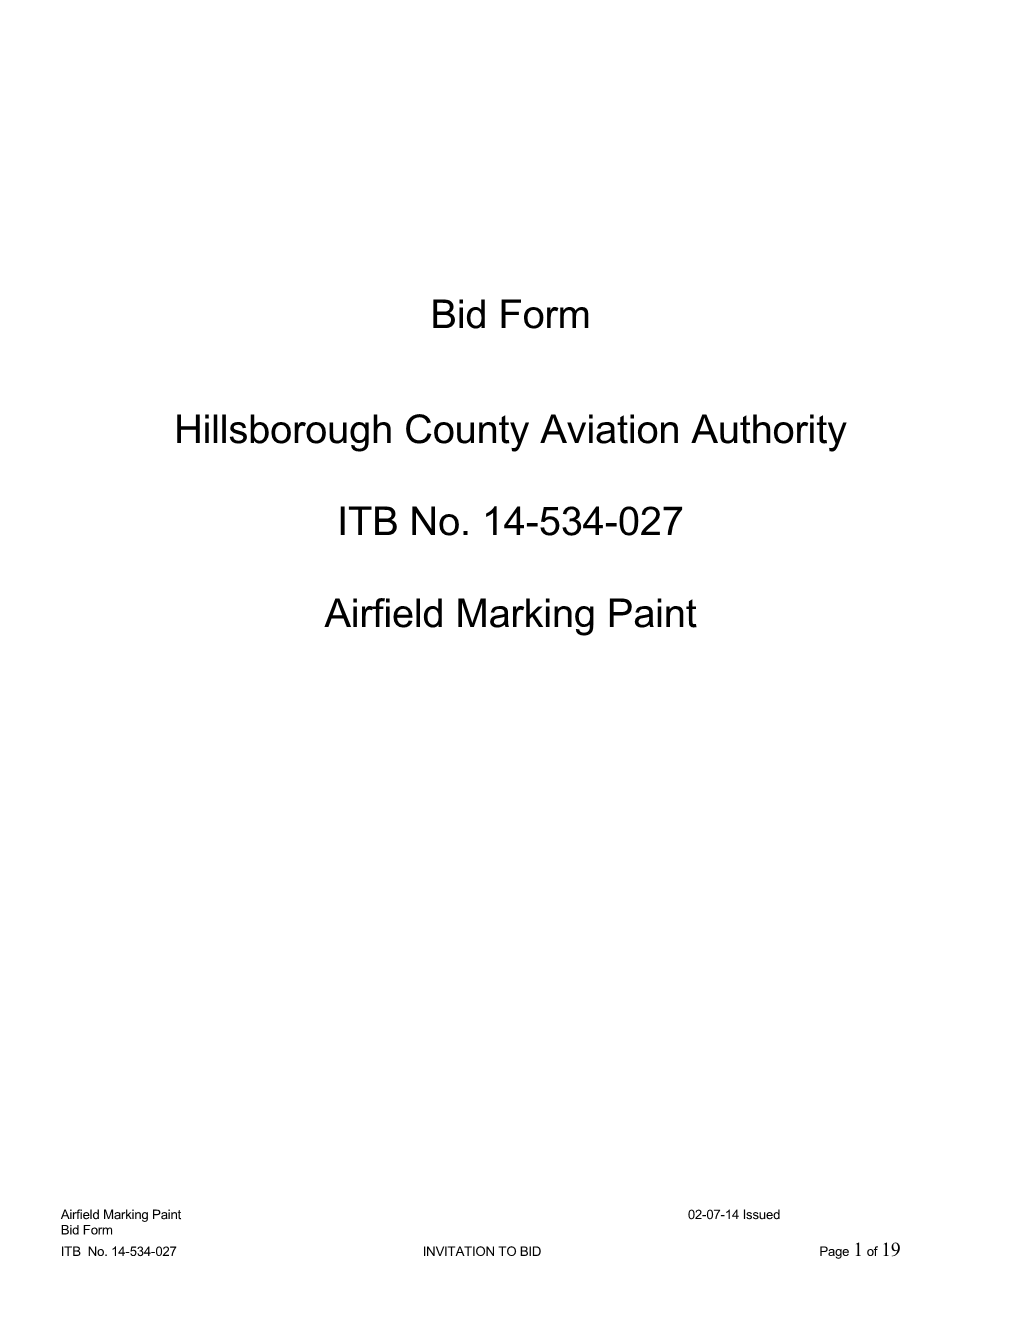 Hillsborough County Aviation Authority s1